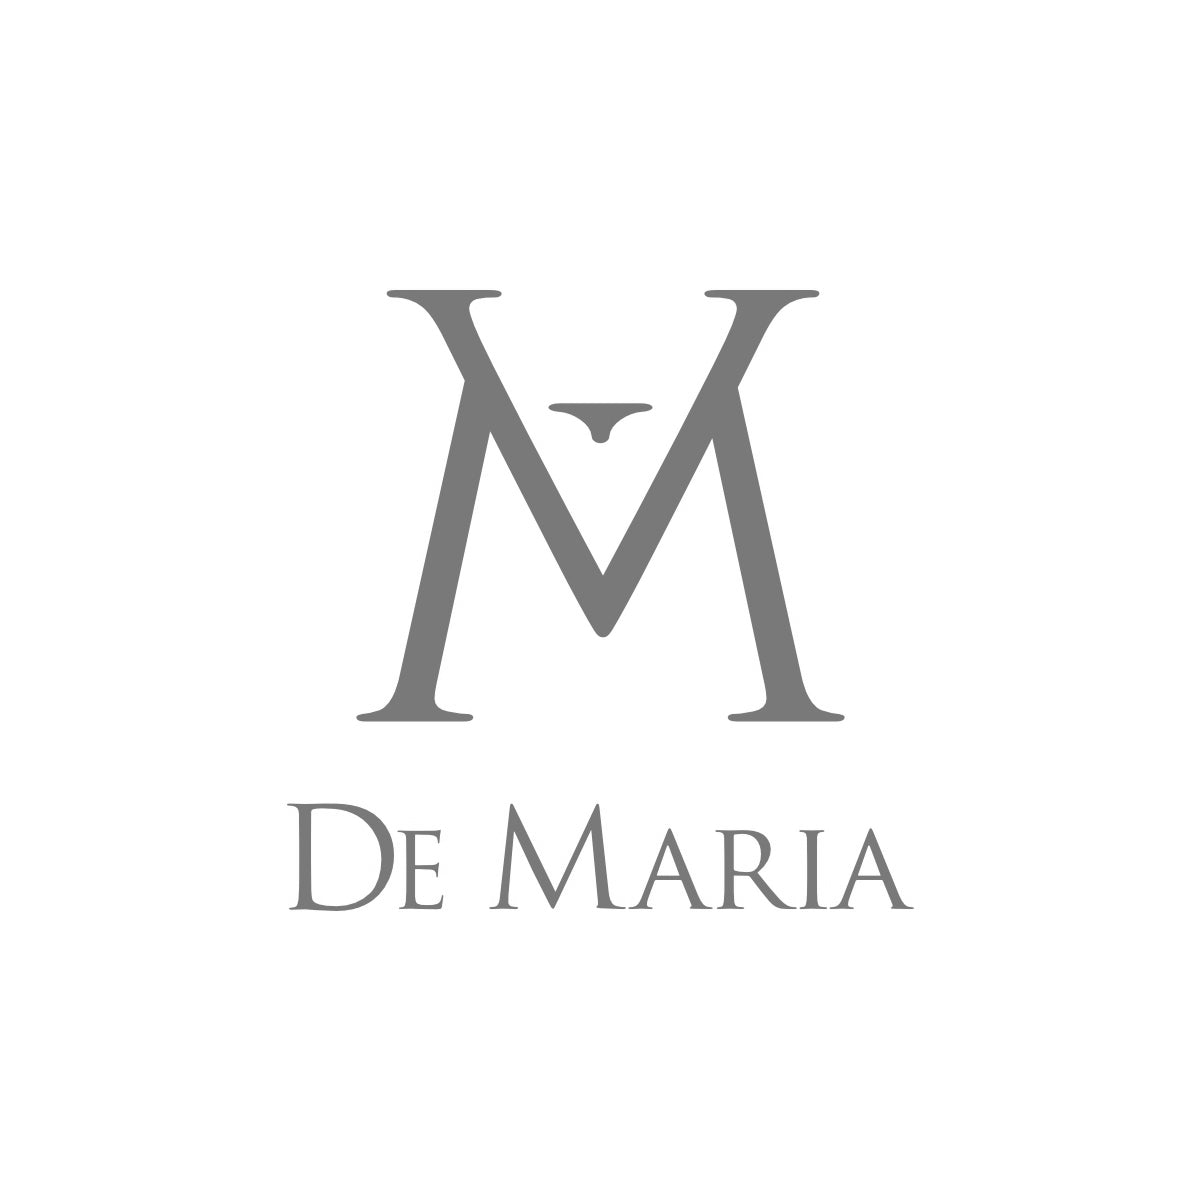 De Maria Design